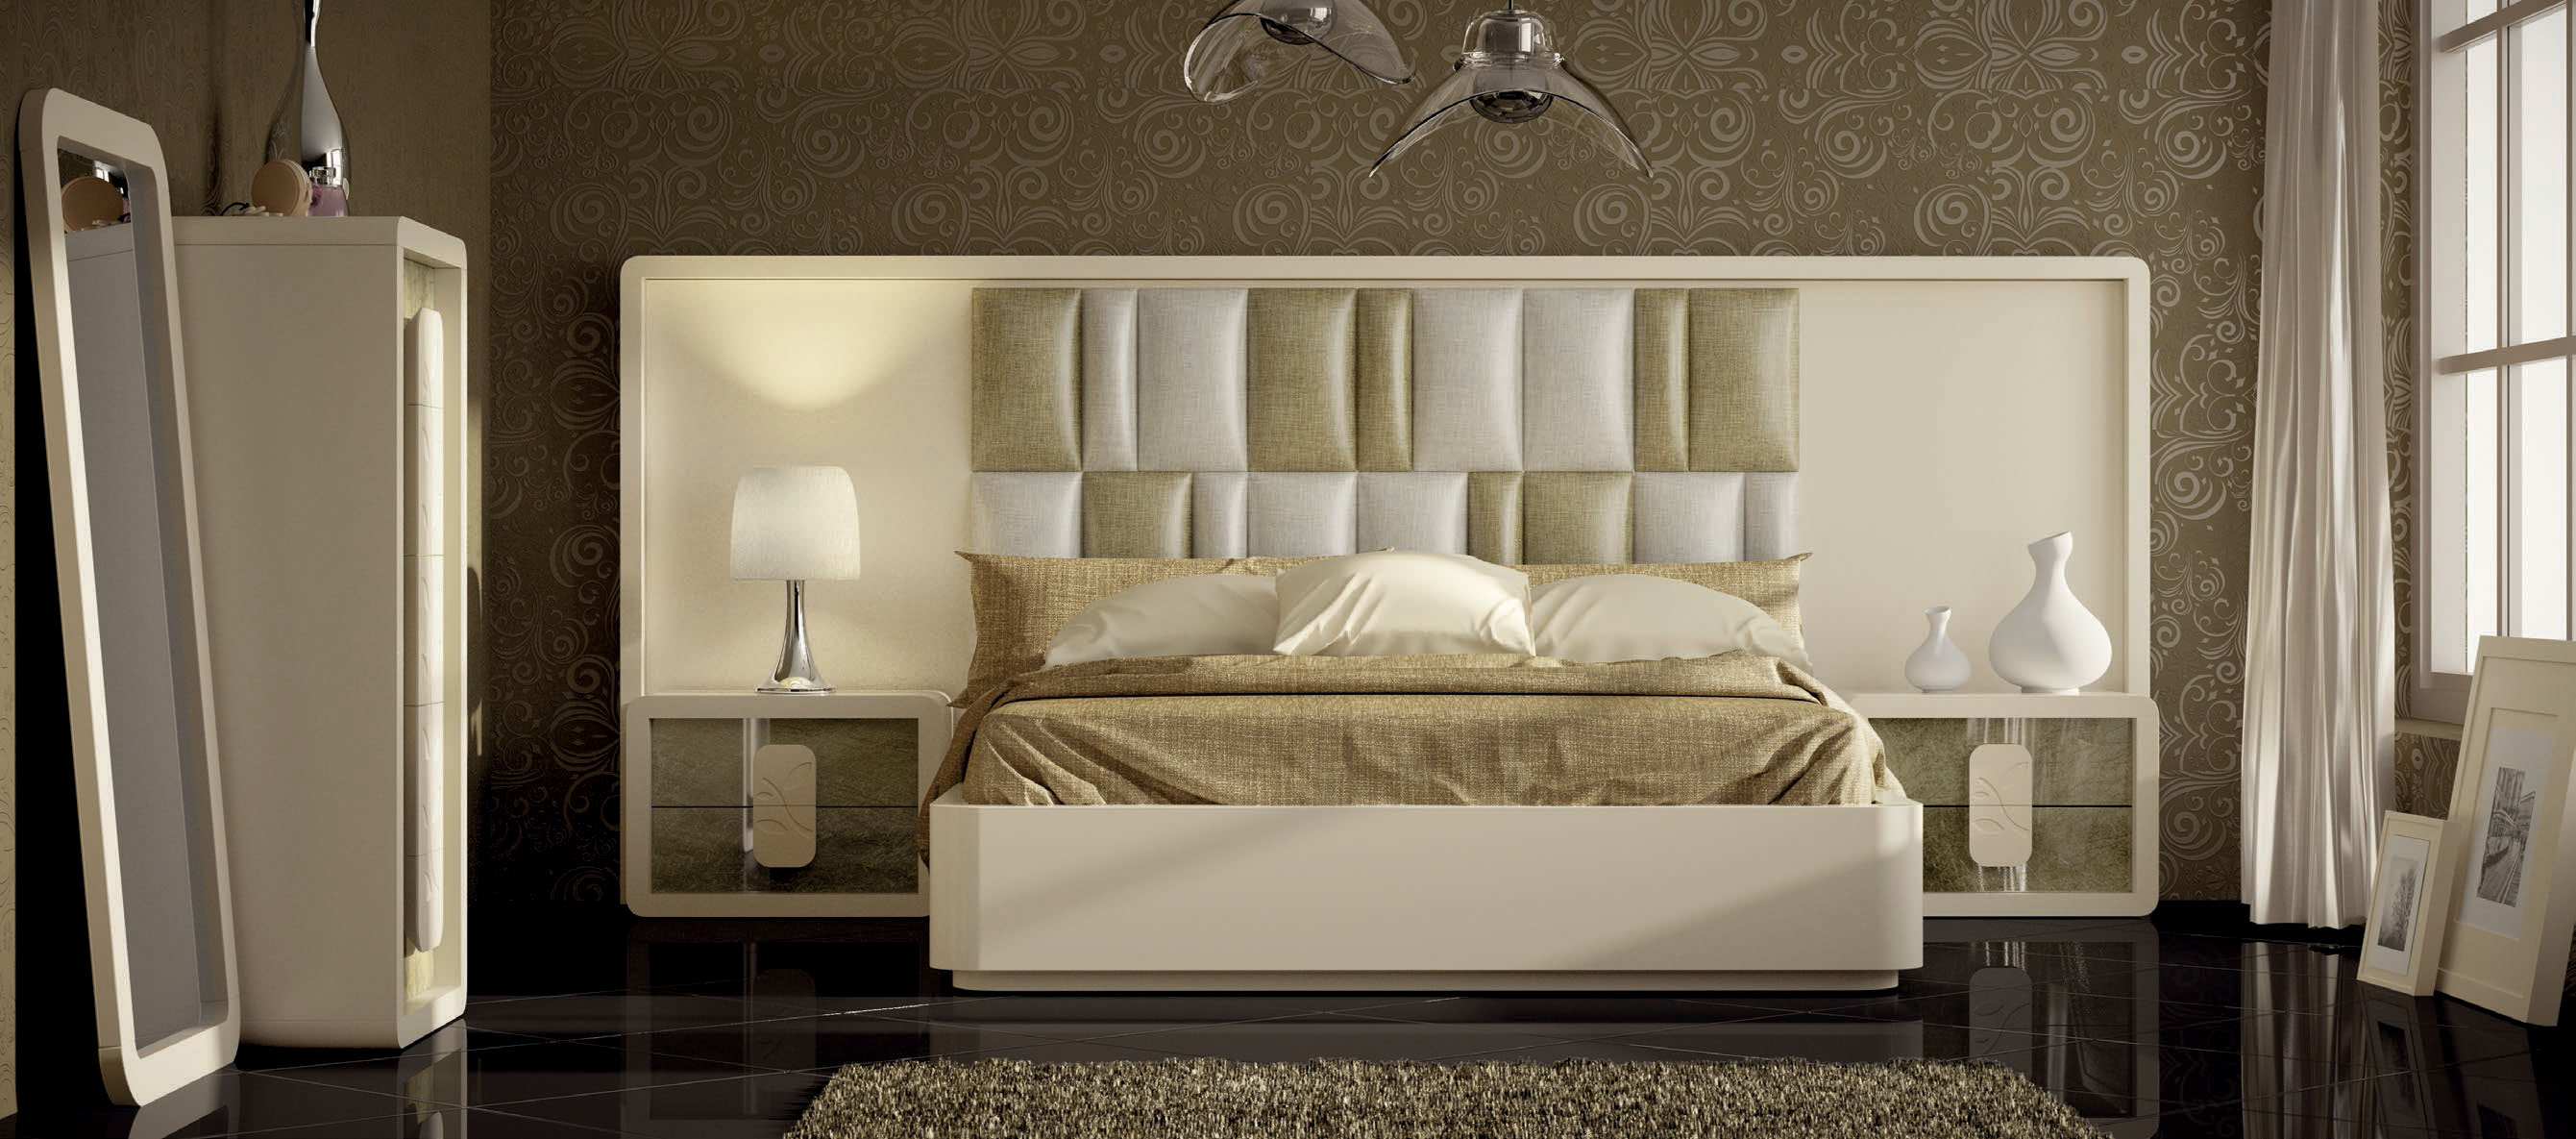 Brands Franco Furniture Bedrooms vol2, Spain DOR 171